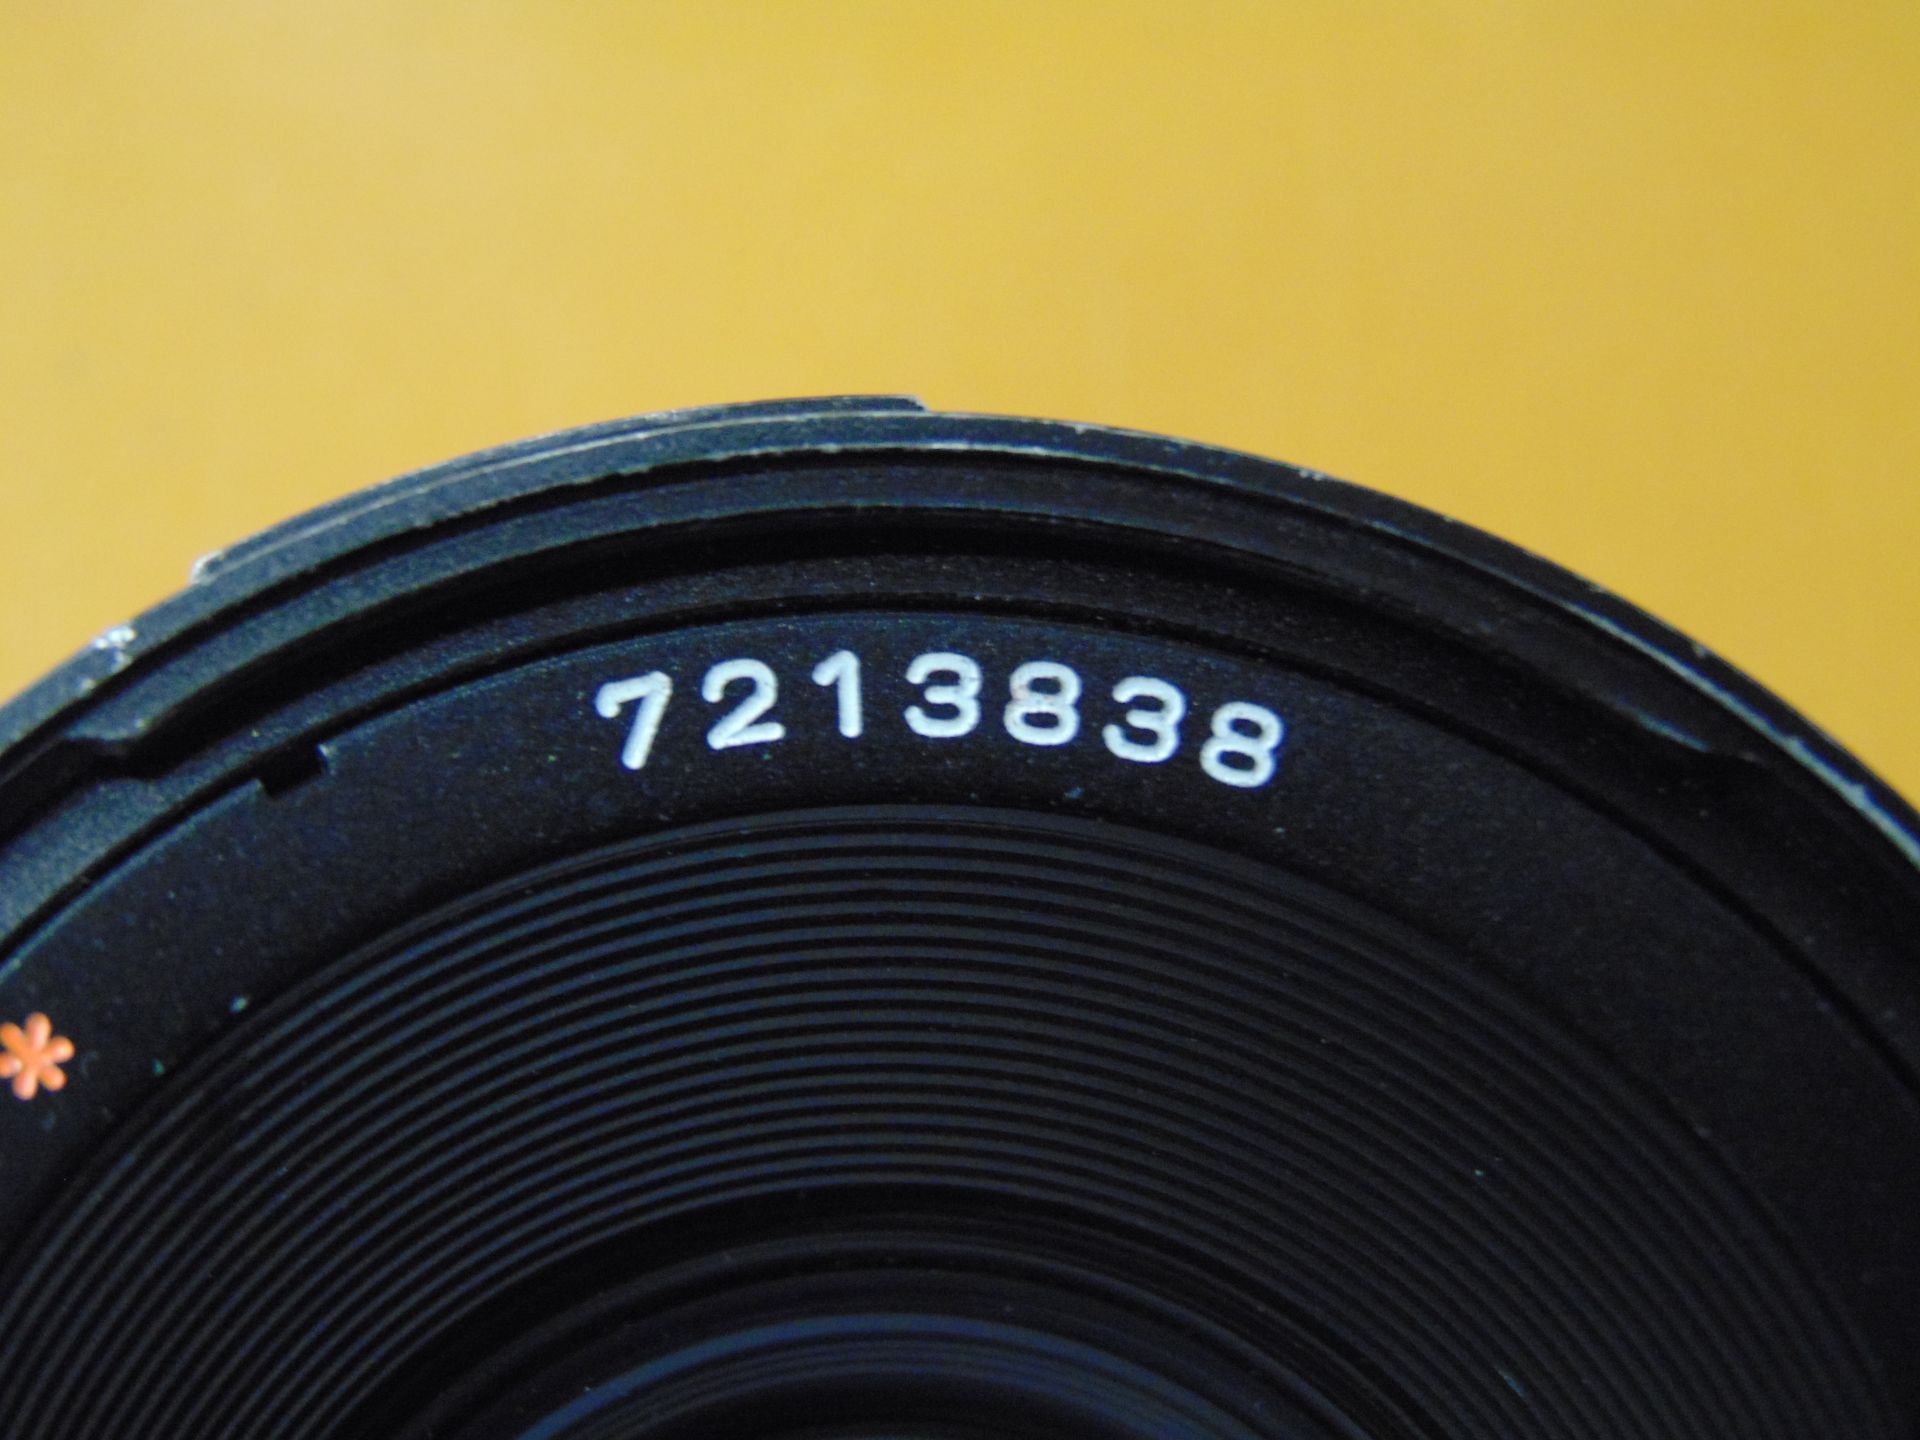 Carl Zeiss 7146422 Planar T* 2.8/80 Lense - Image 8 of 9